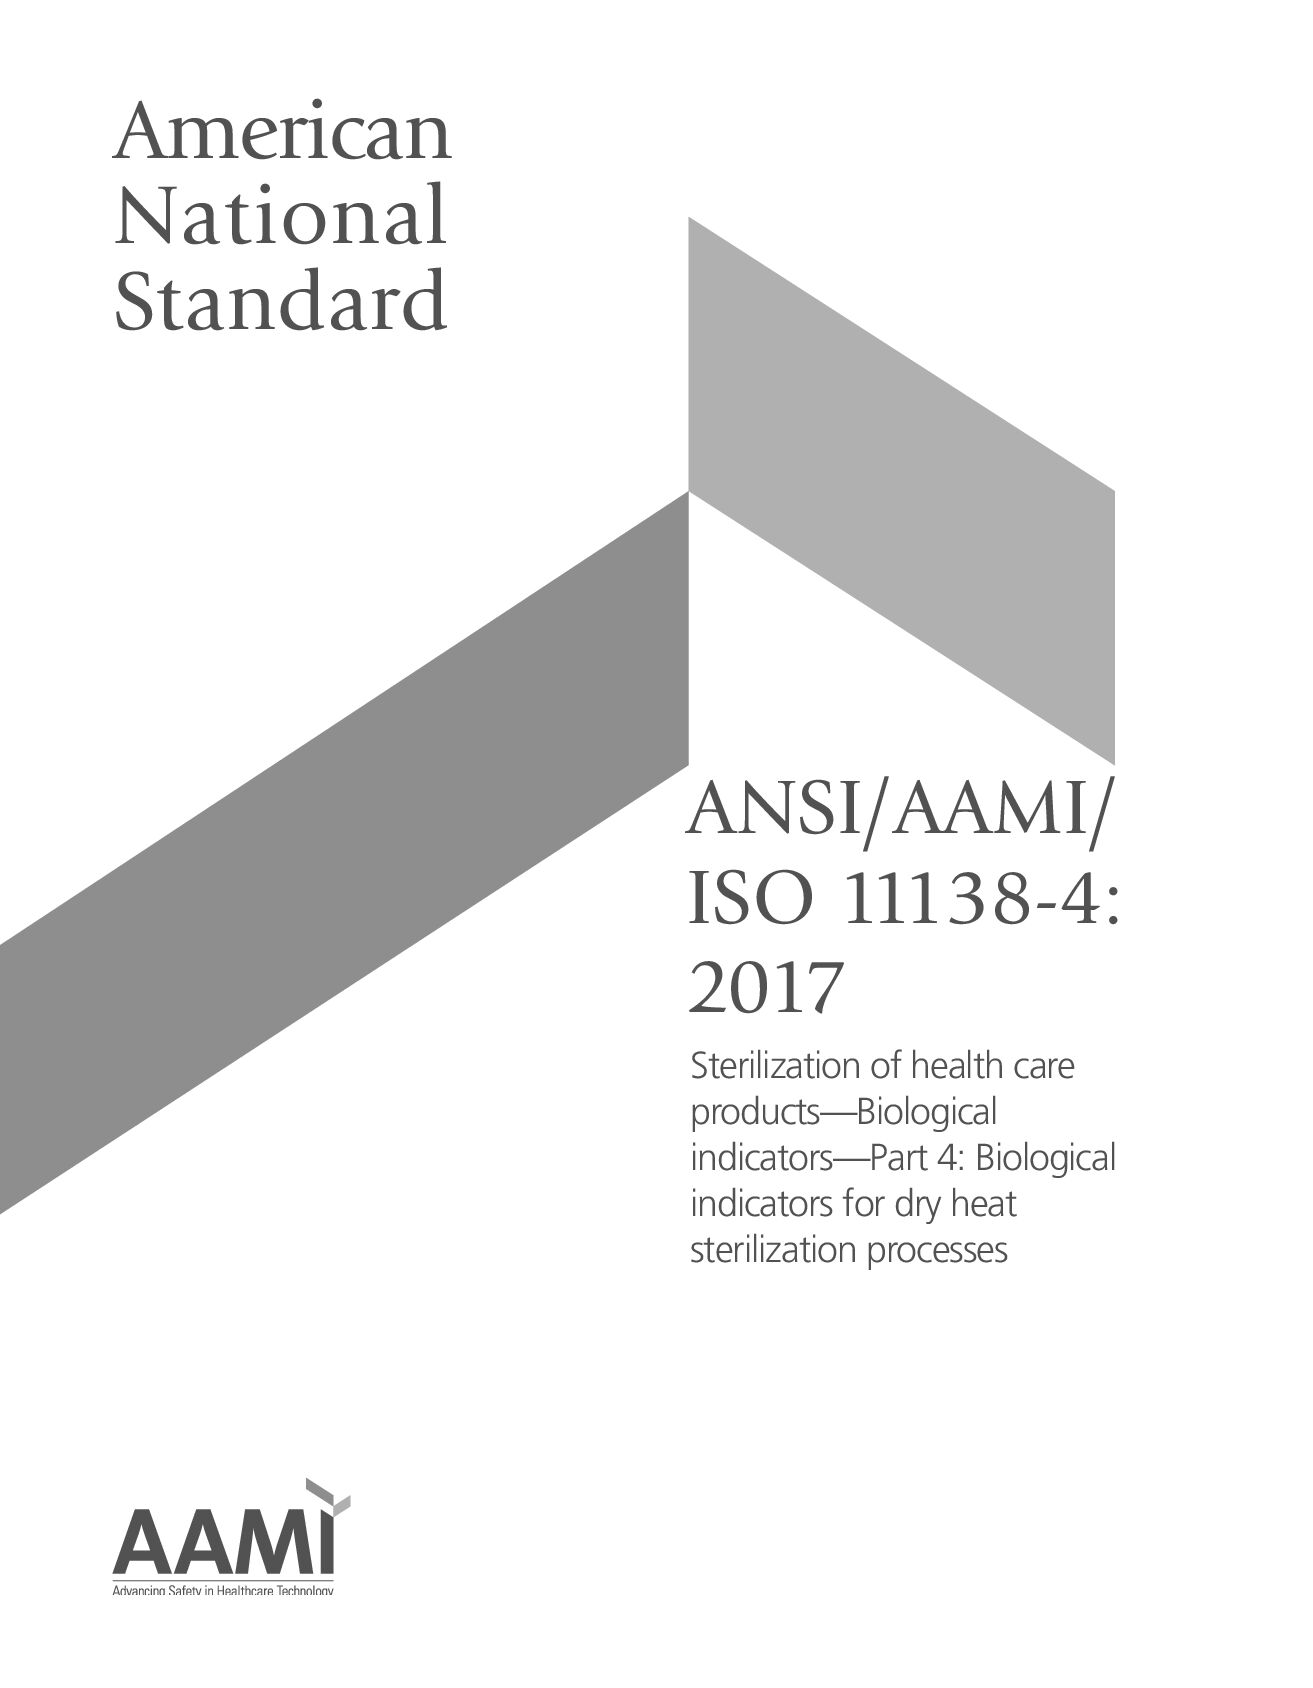 ANSI/AAMI/ISO 11138-4:2017